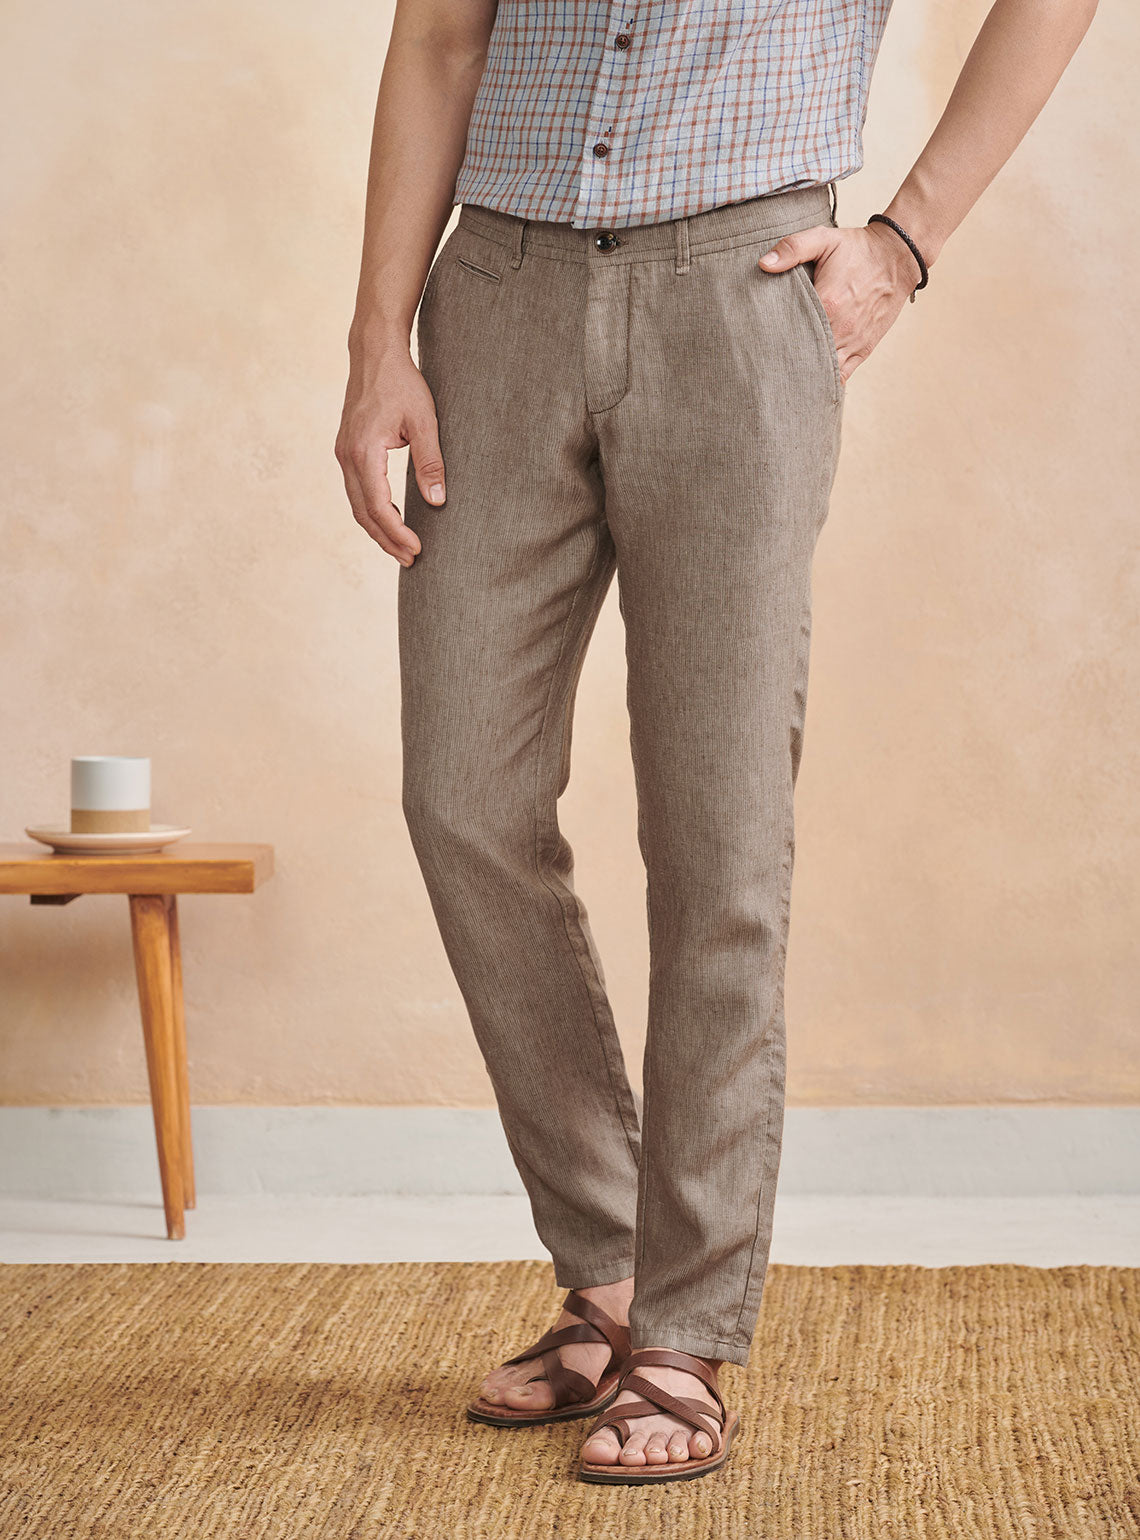 Buy LINEN PANTS  100 Linen Turkishstyle Pants Indian Pants  Online in  India  Etsy